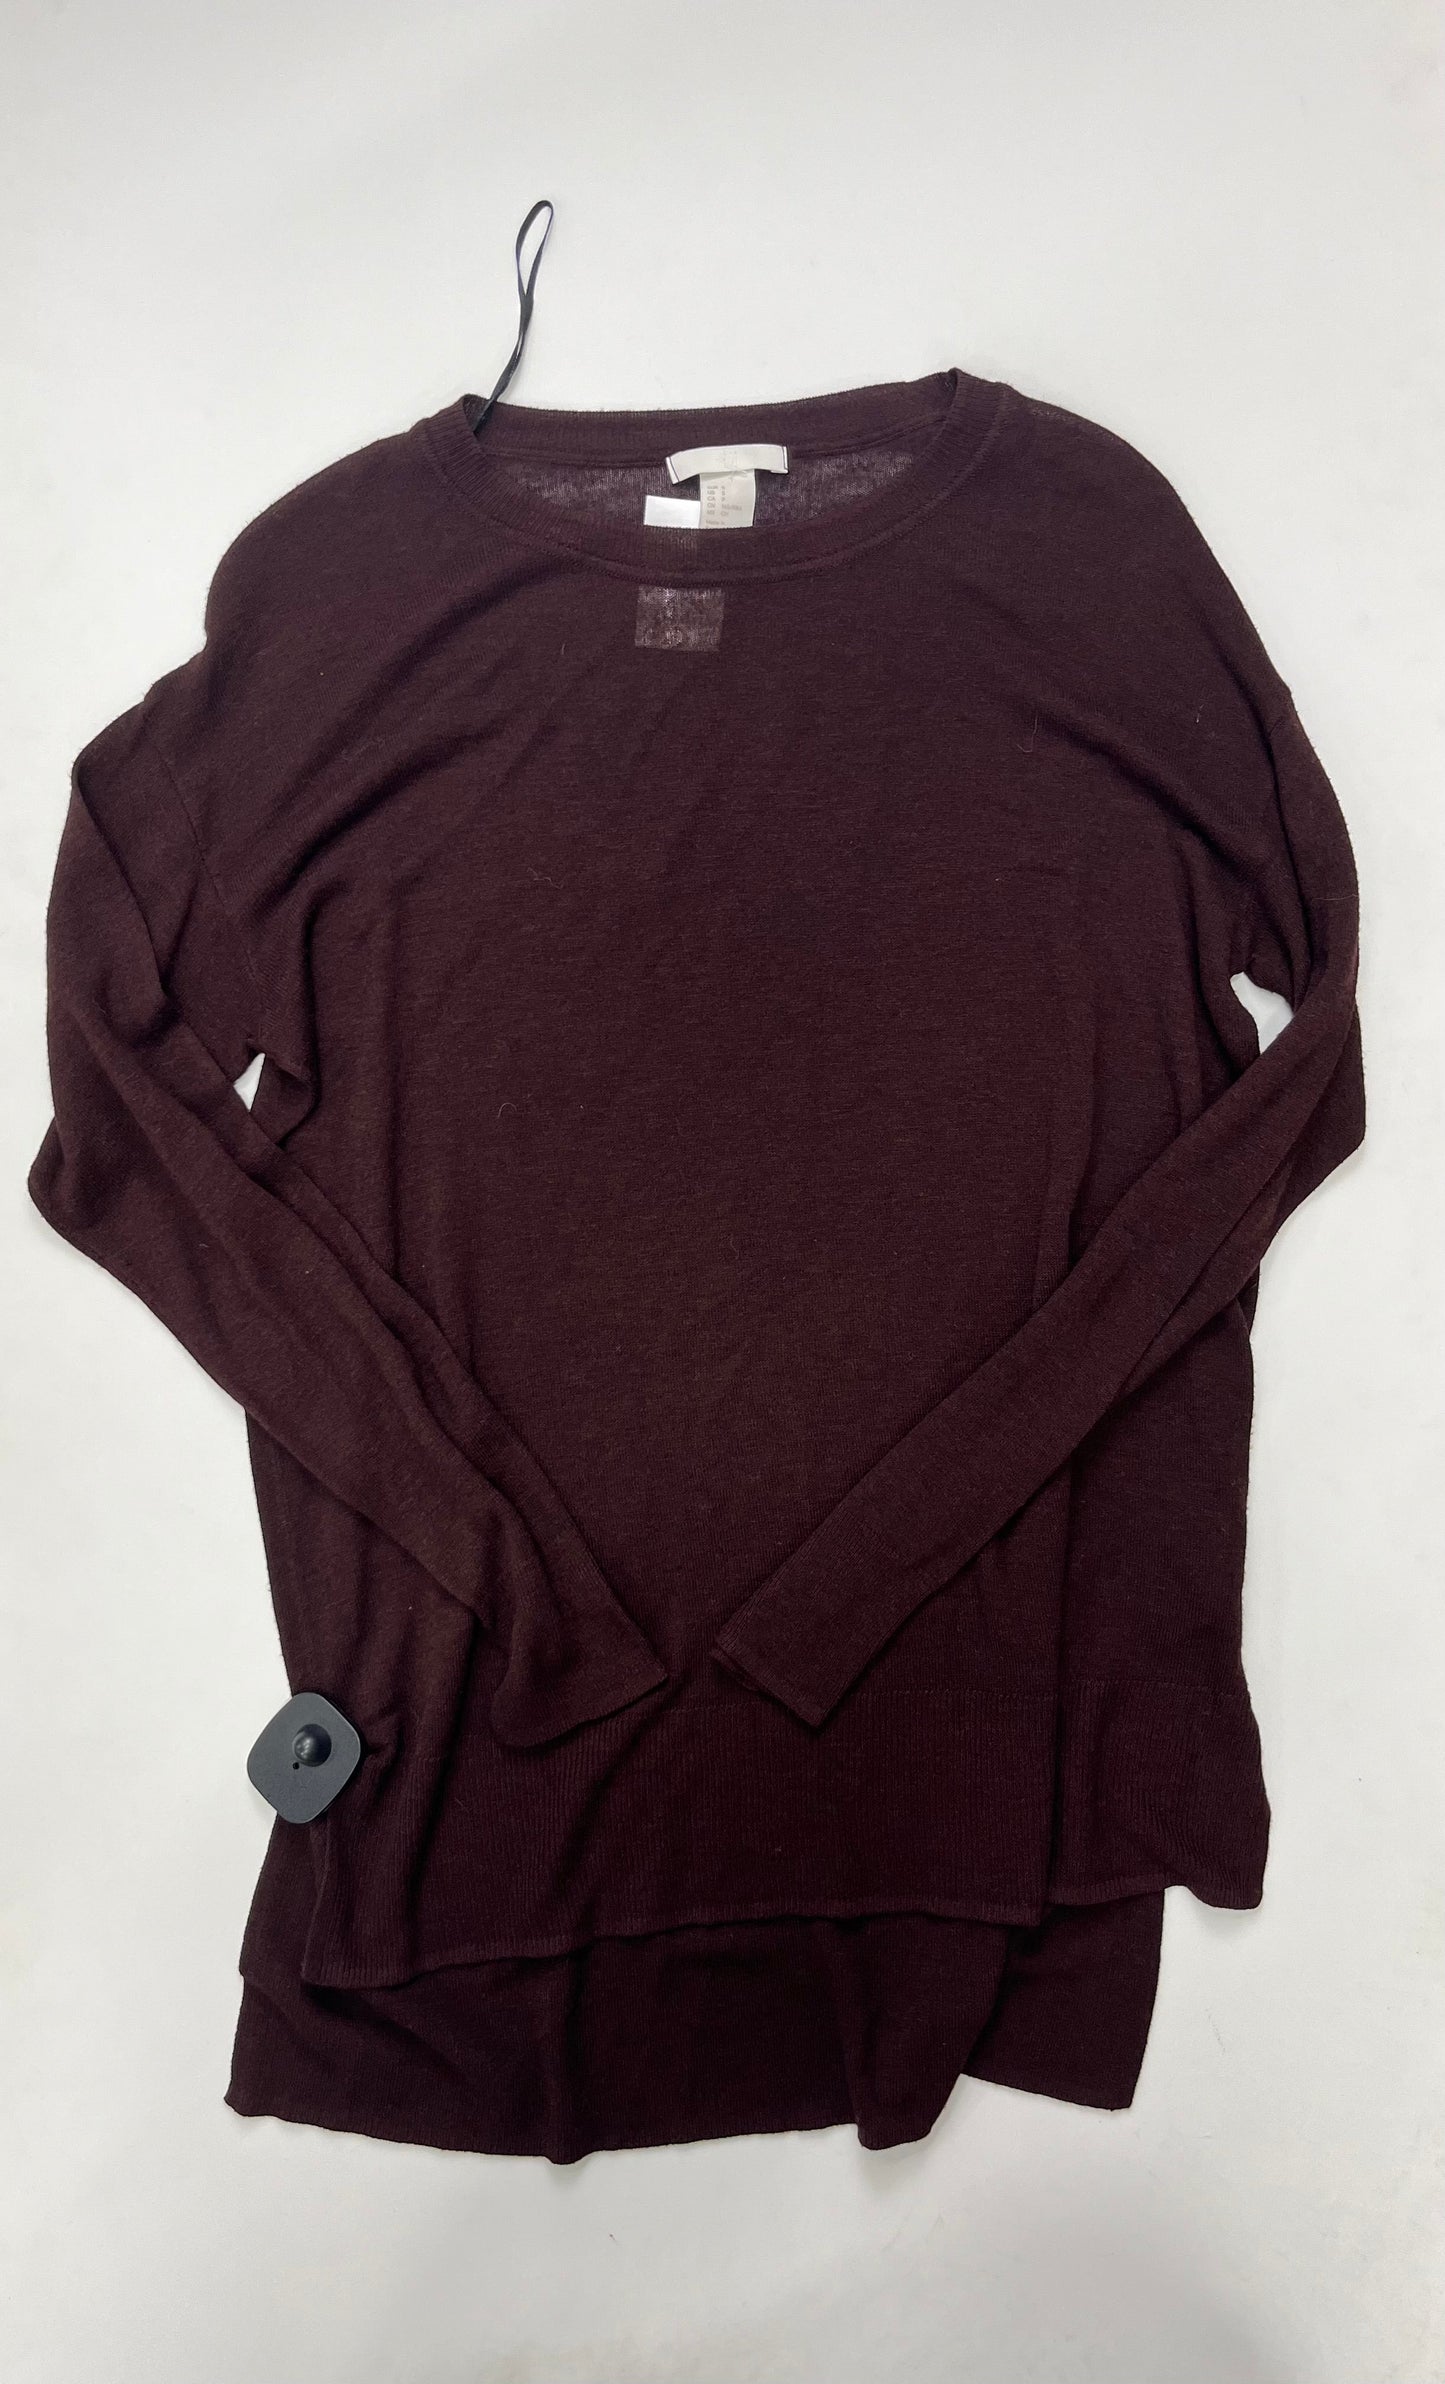 Burgundy Sweater H&m, Size S